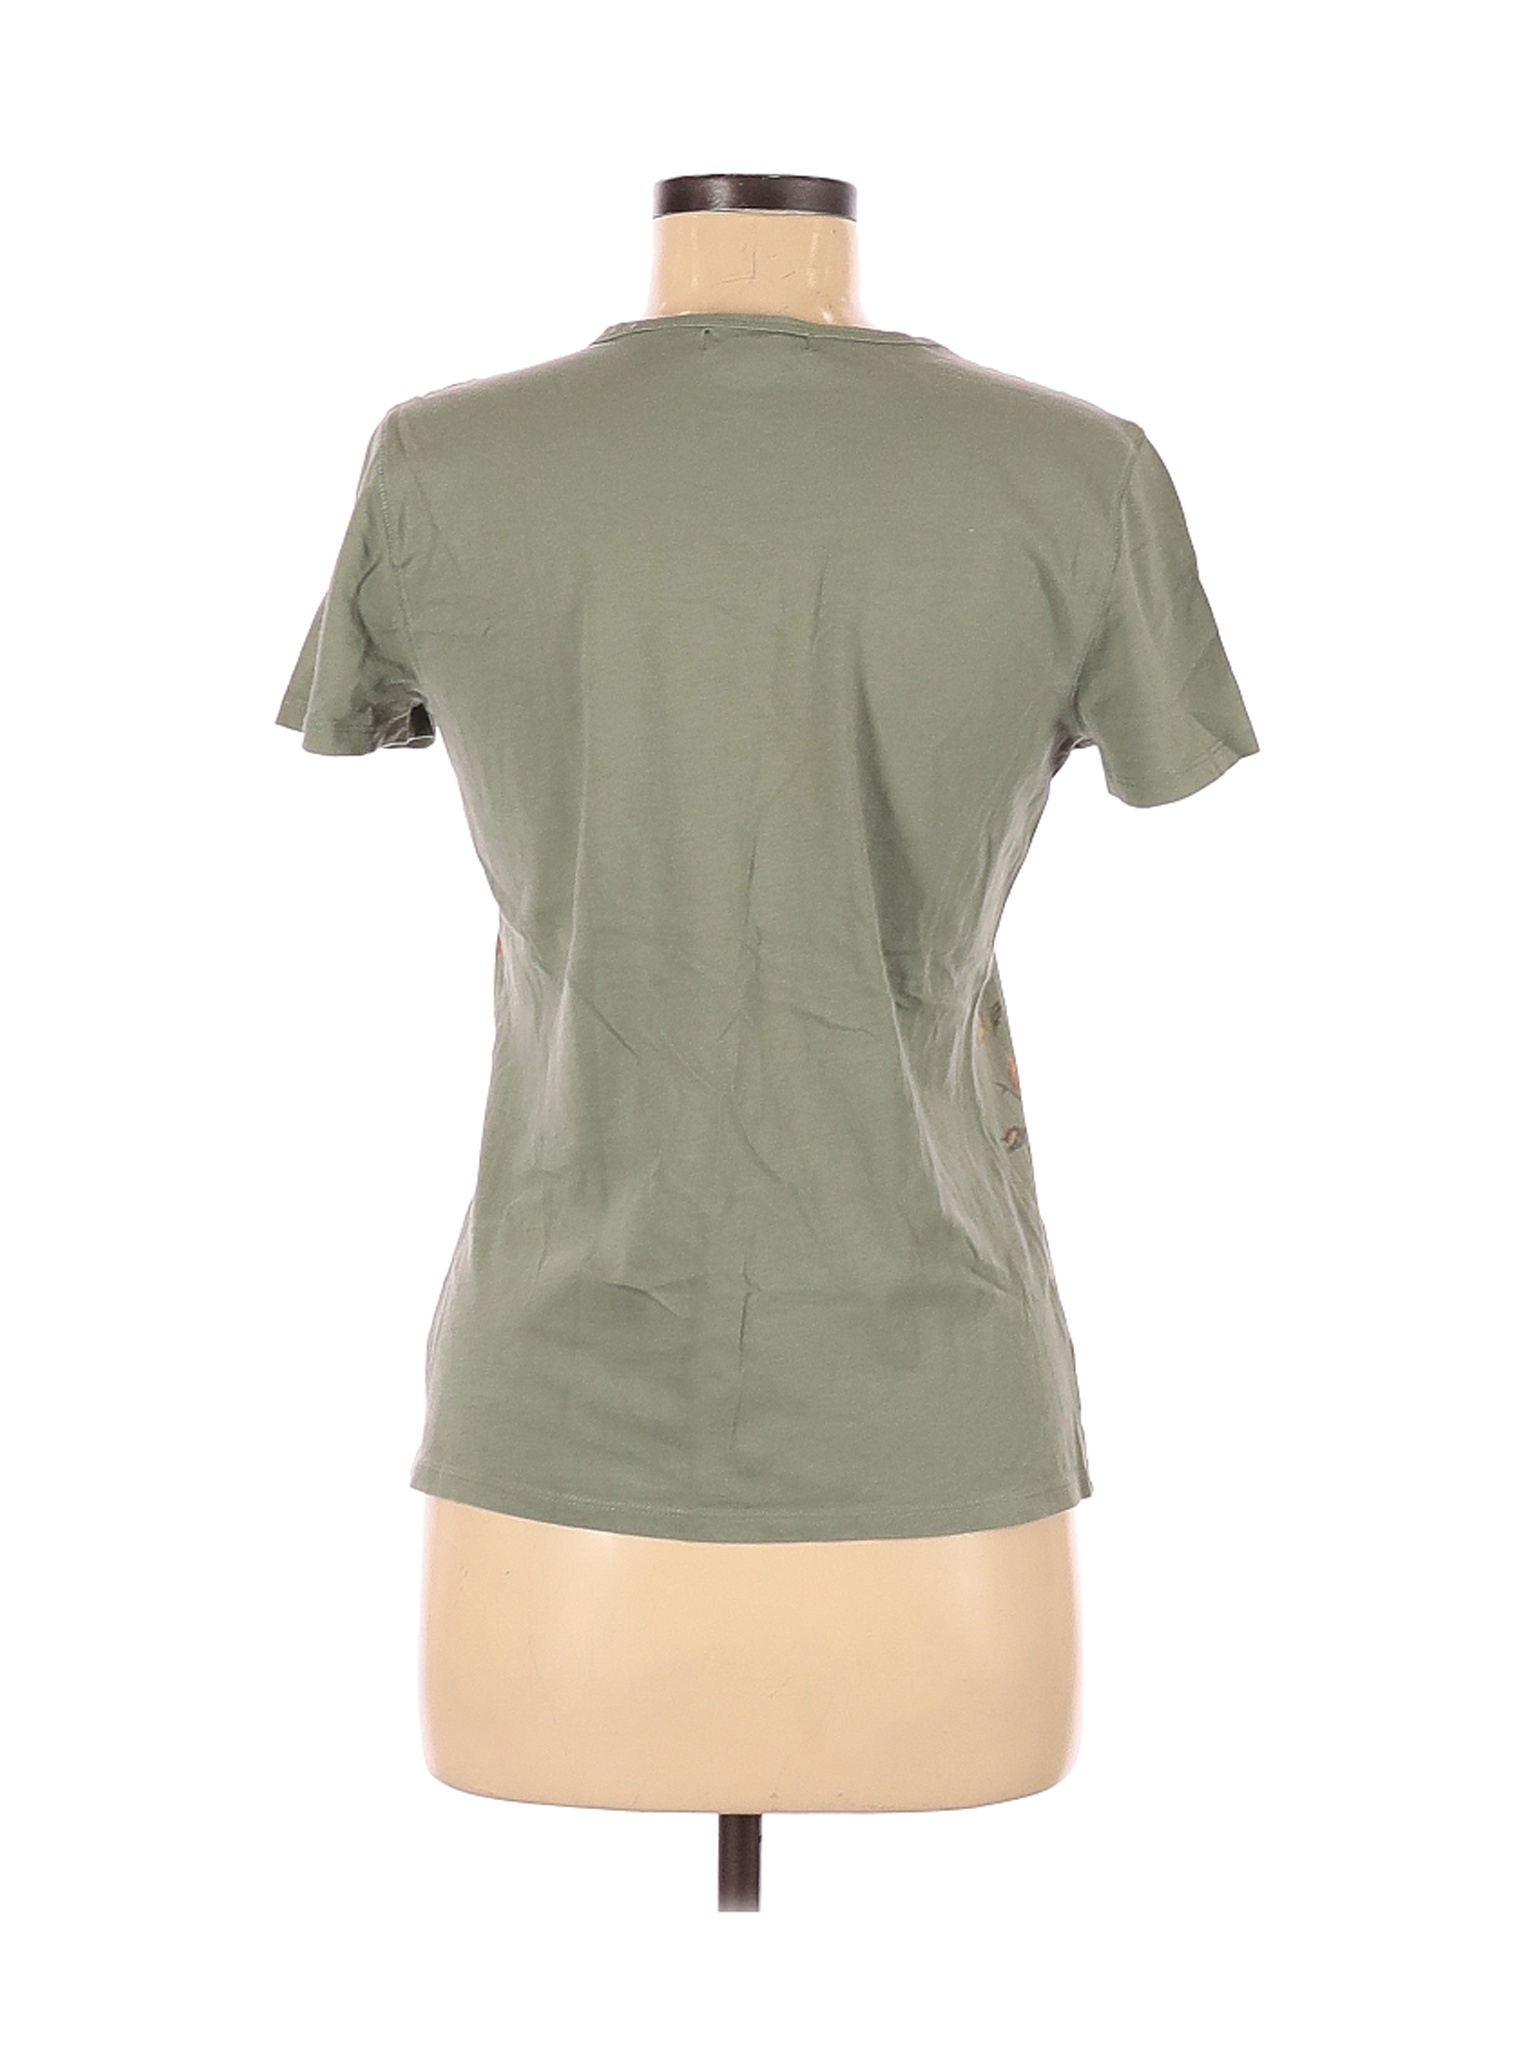 Lauren Jeans Co. Women Green Short Sleeve T-Shirt M | eBay